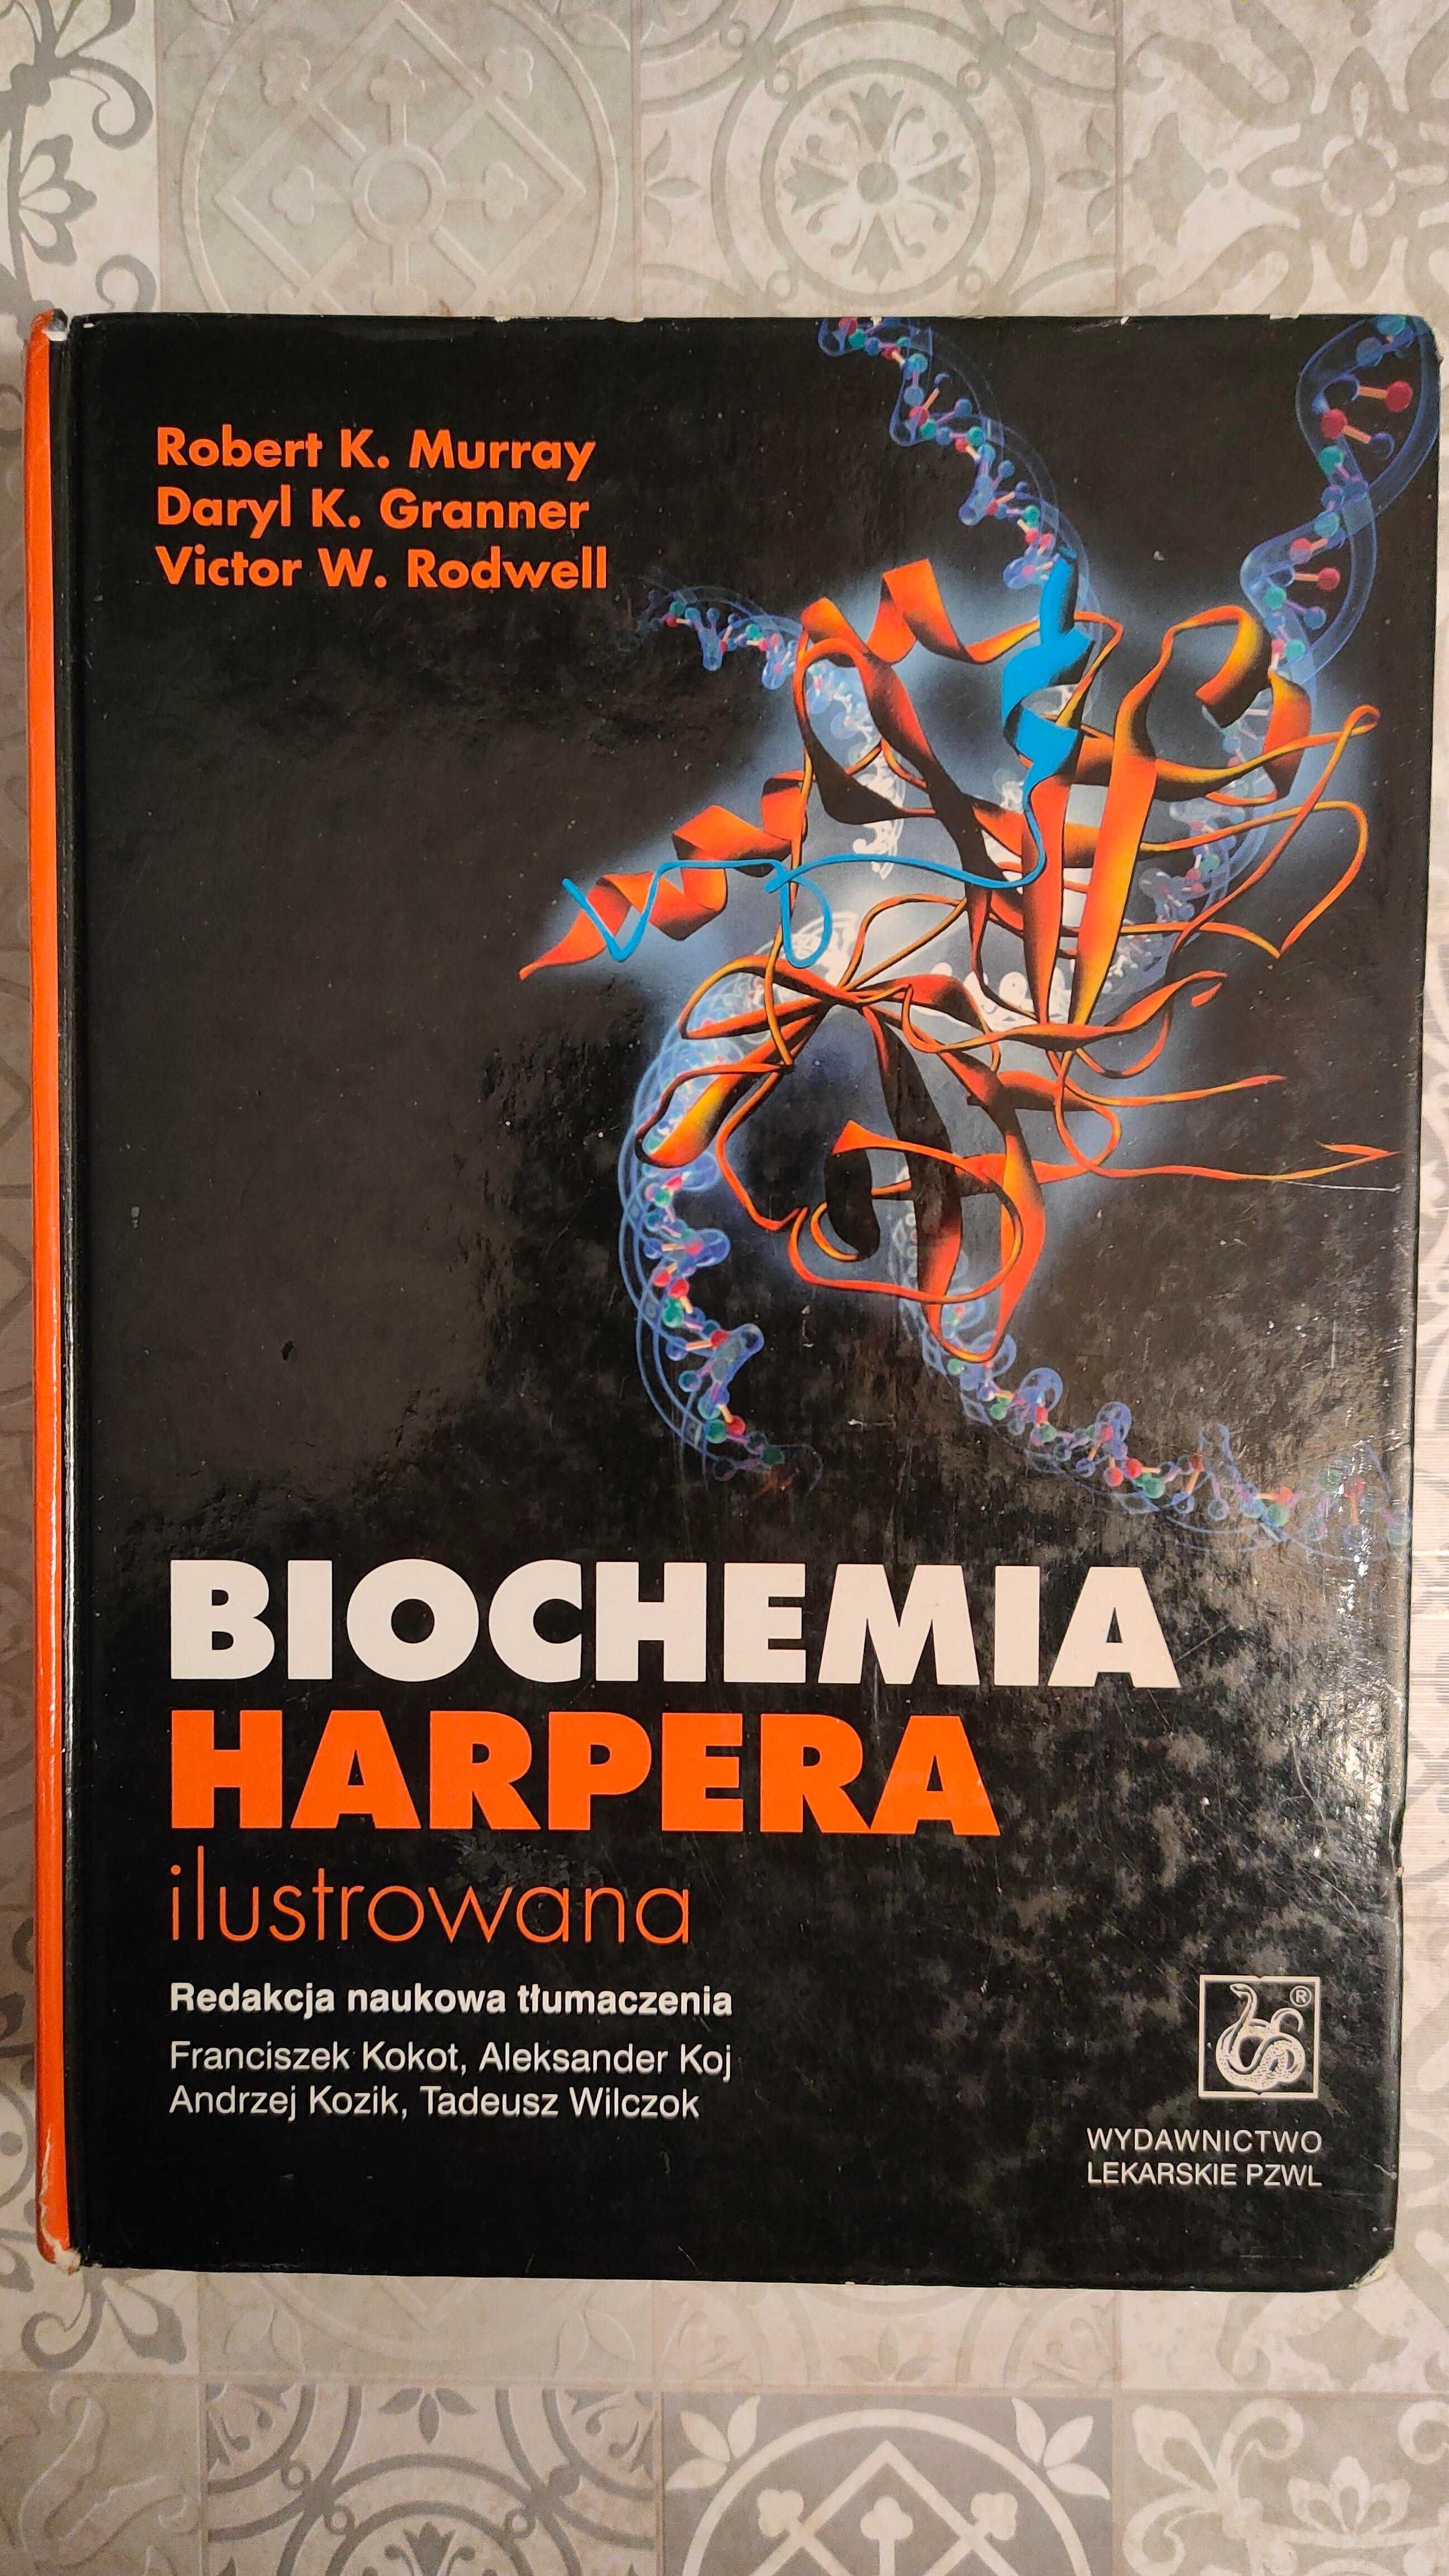 Biochemia Harpera – R.K. Murray